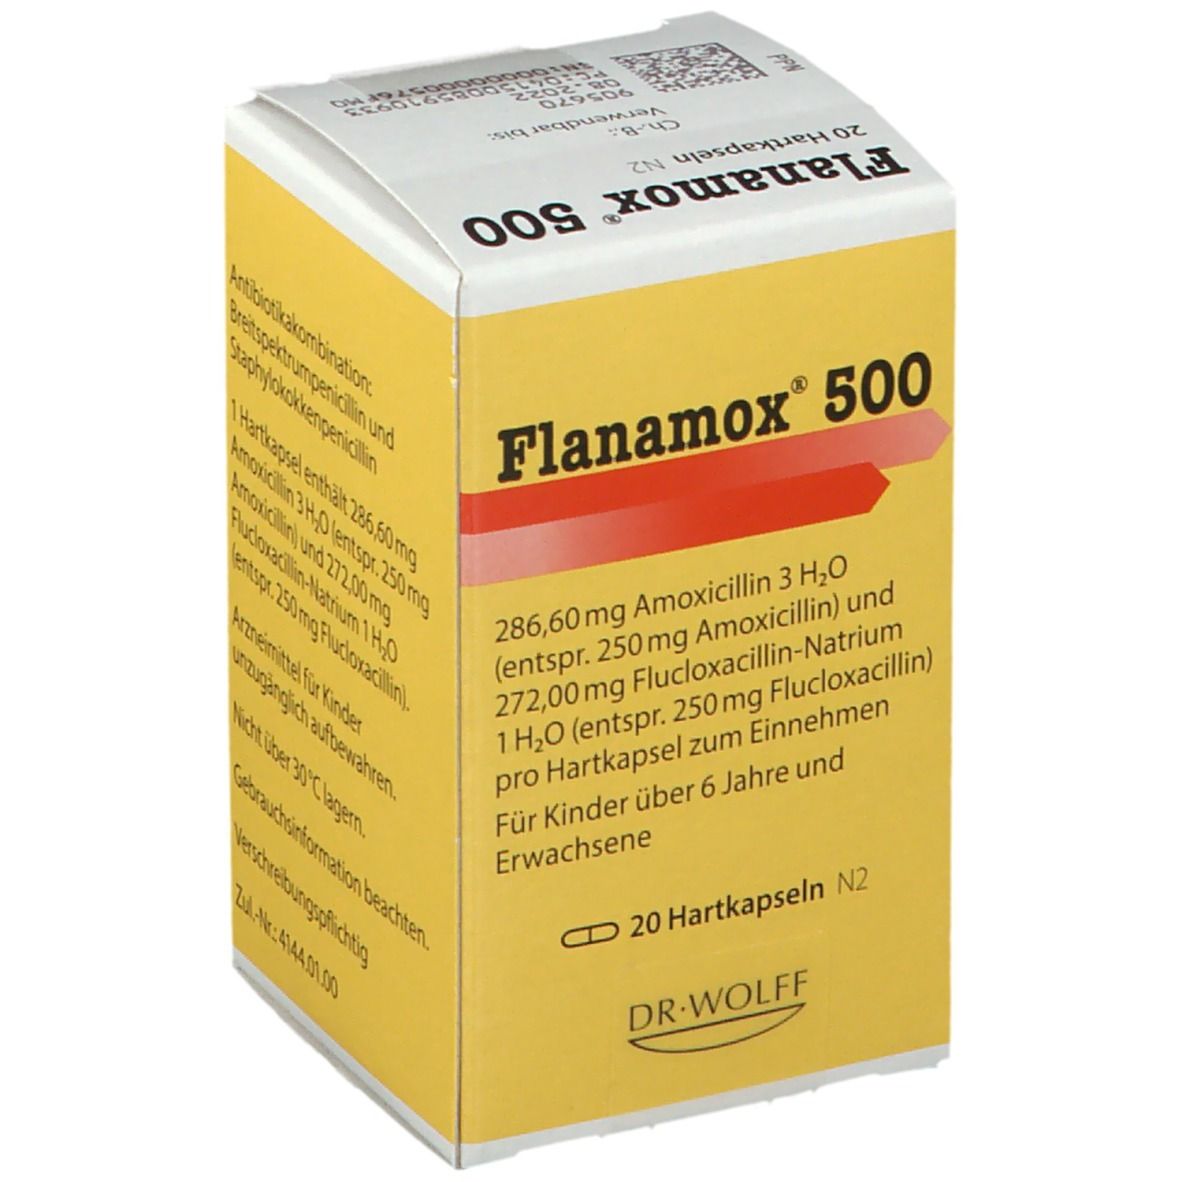 Flanamox 500